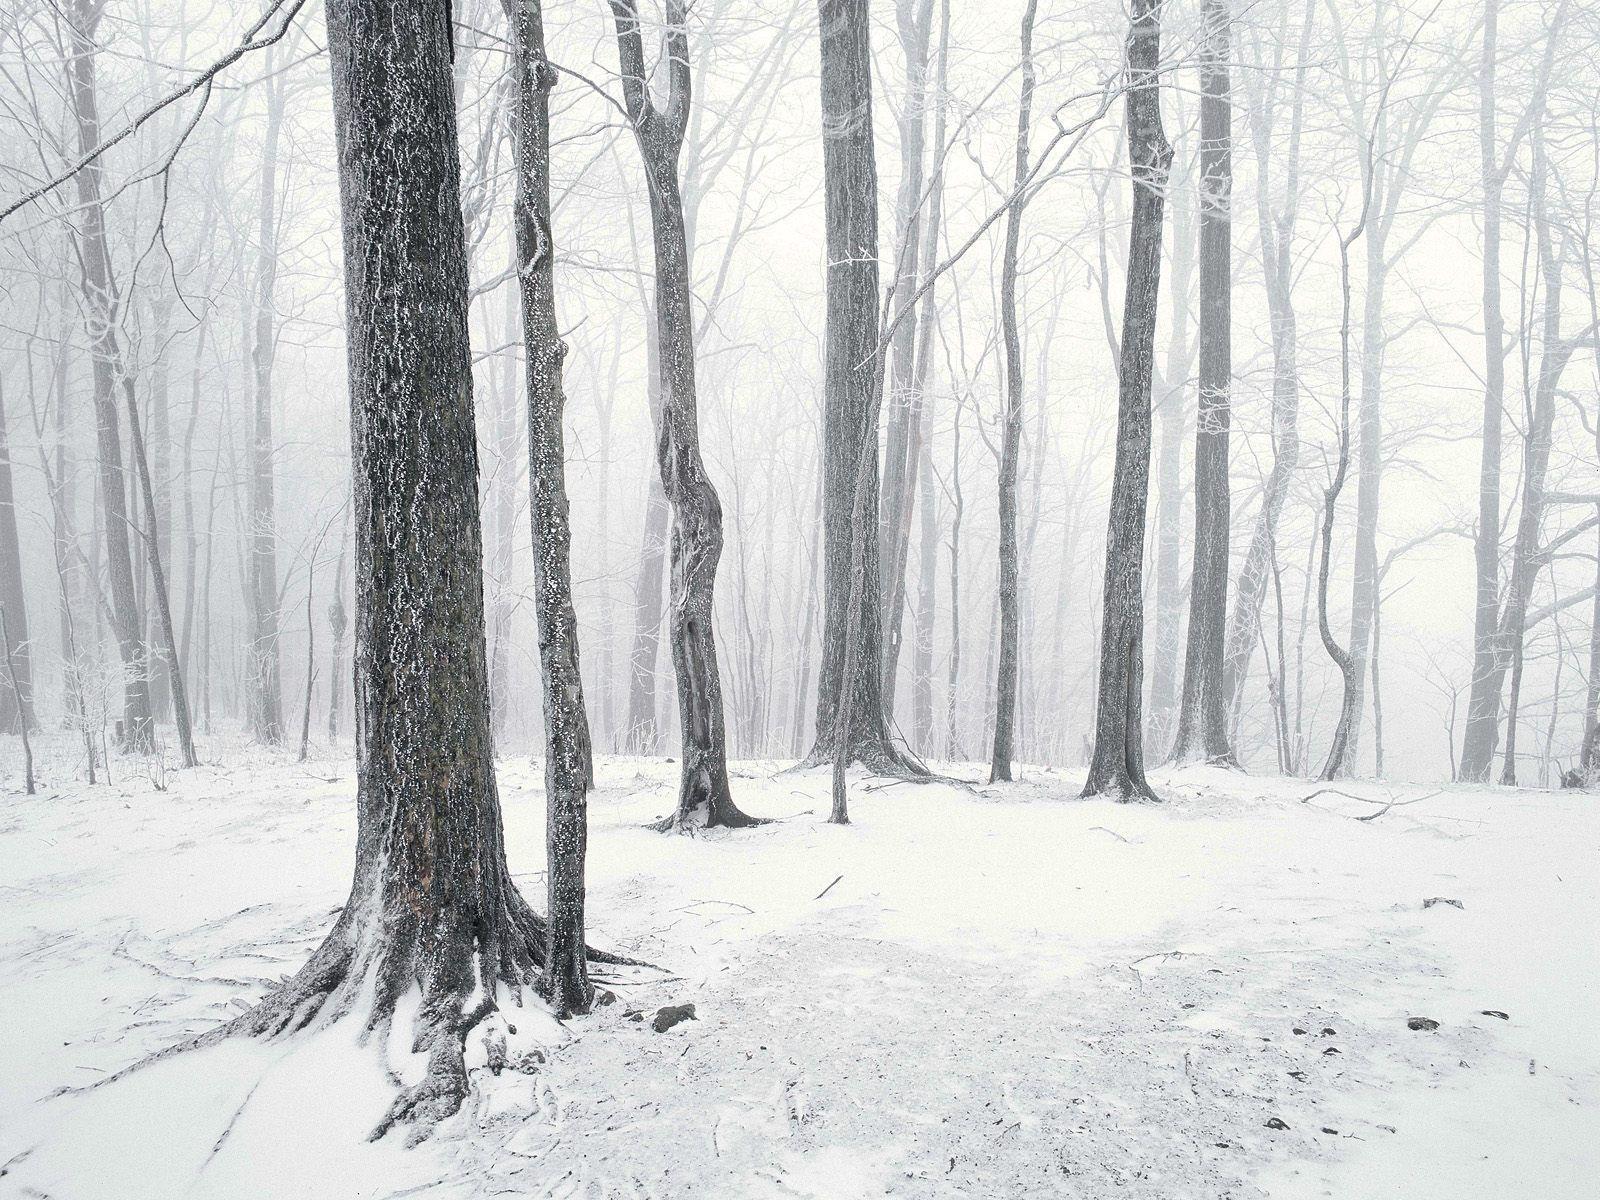 Download wallpaper: winter Forest, snow, trees, desktop wallpaper